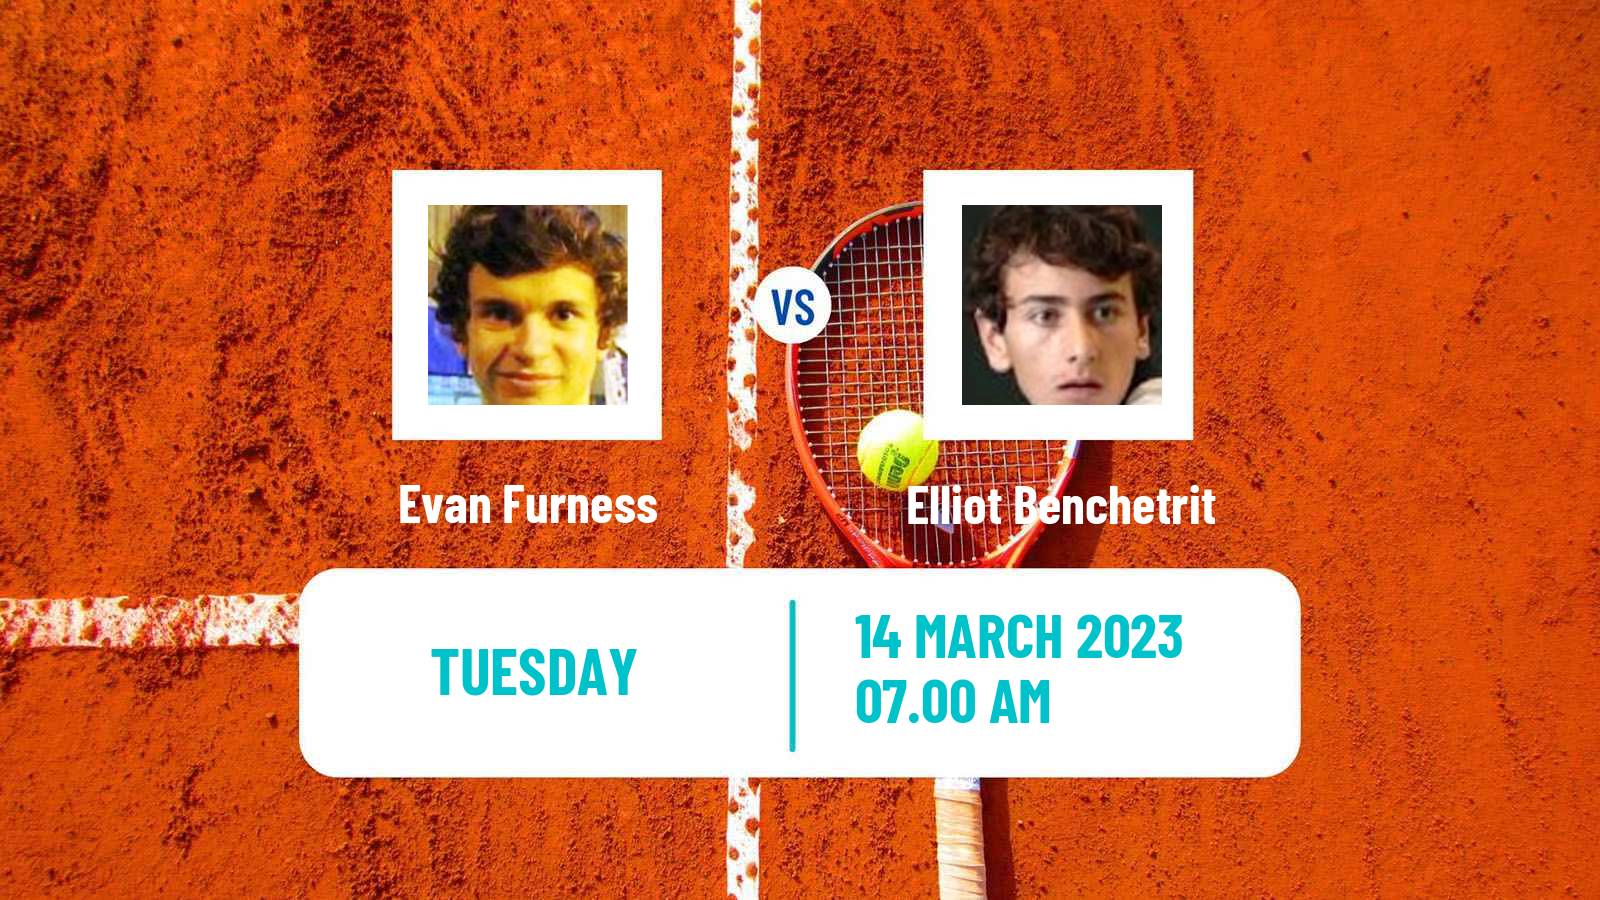 Tennis ATP Challenger Evan Furness - Elliot Benchetrit